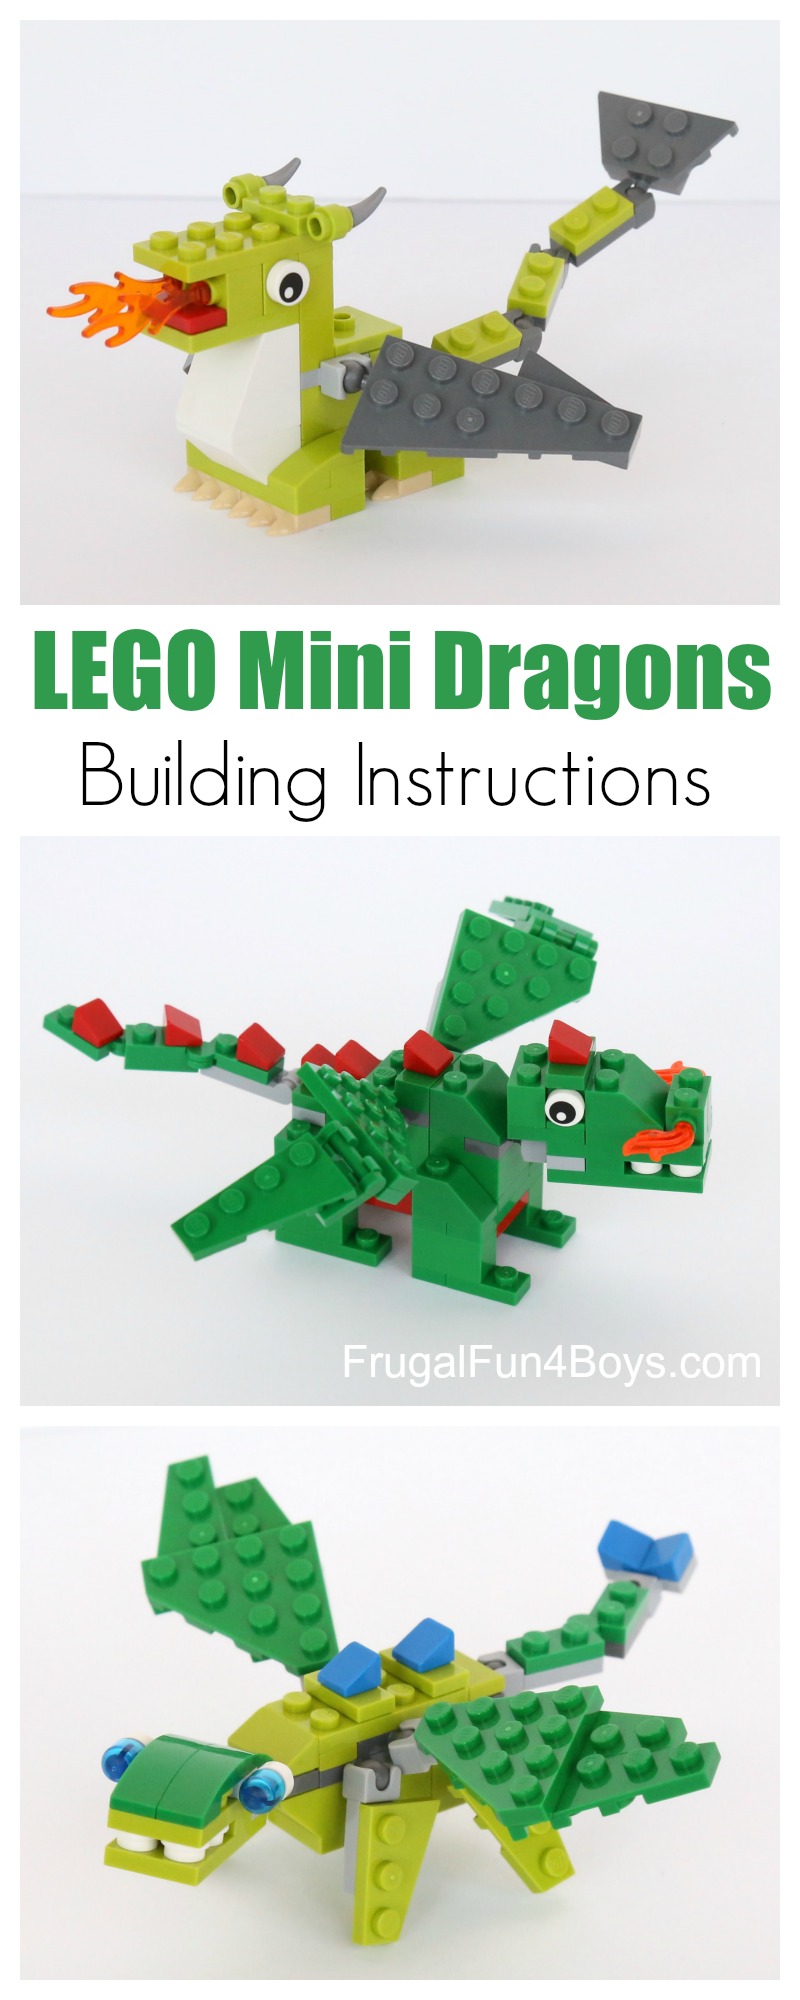 LEGO Mini Dragons - Building Instructions